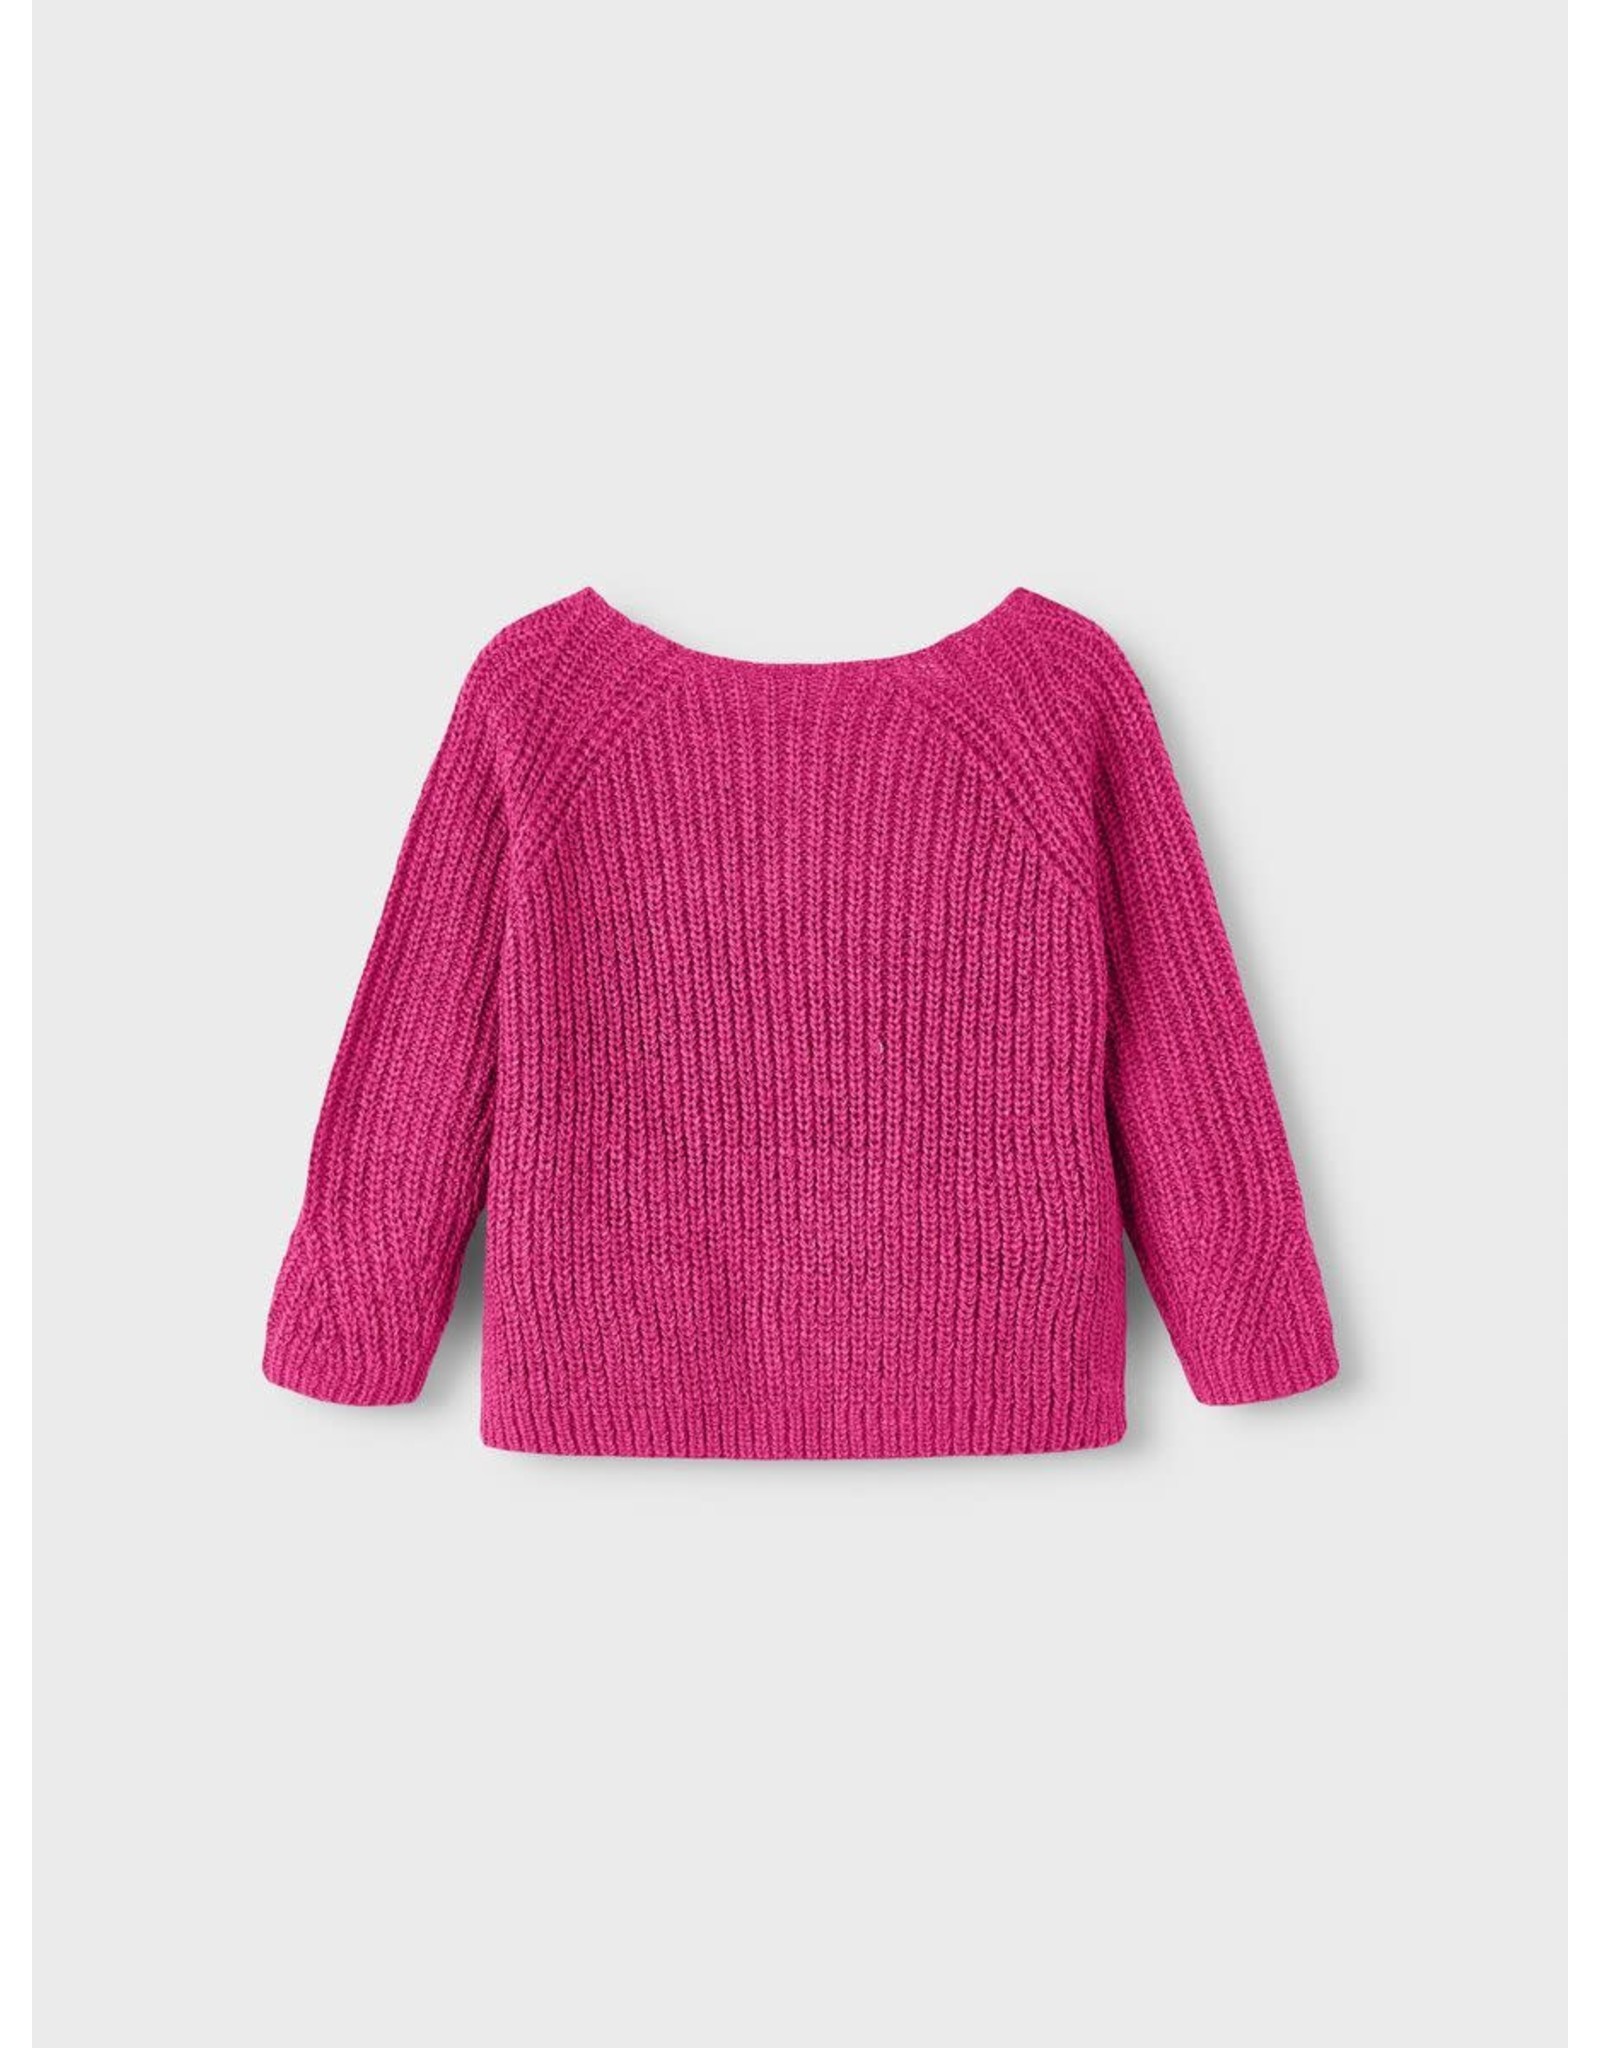 wond Pelgrim dubbel Fuchsia roze gebreide trui voor kleine meisjes van Name It | hejsan.be -  Hejsan Hoppsan